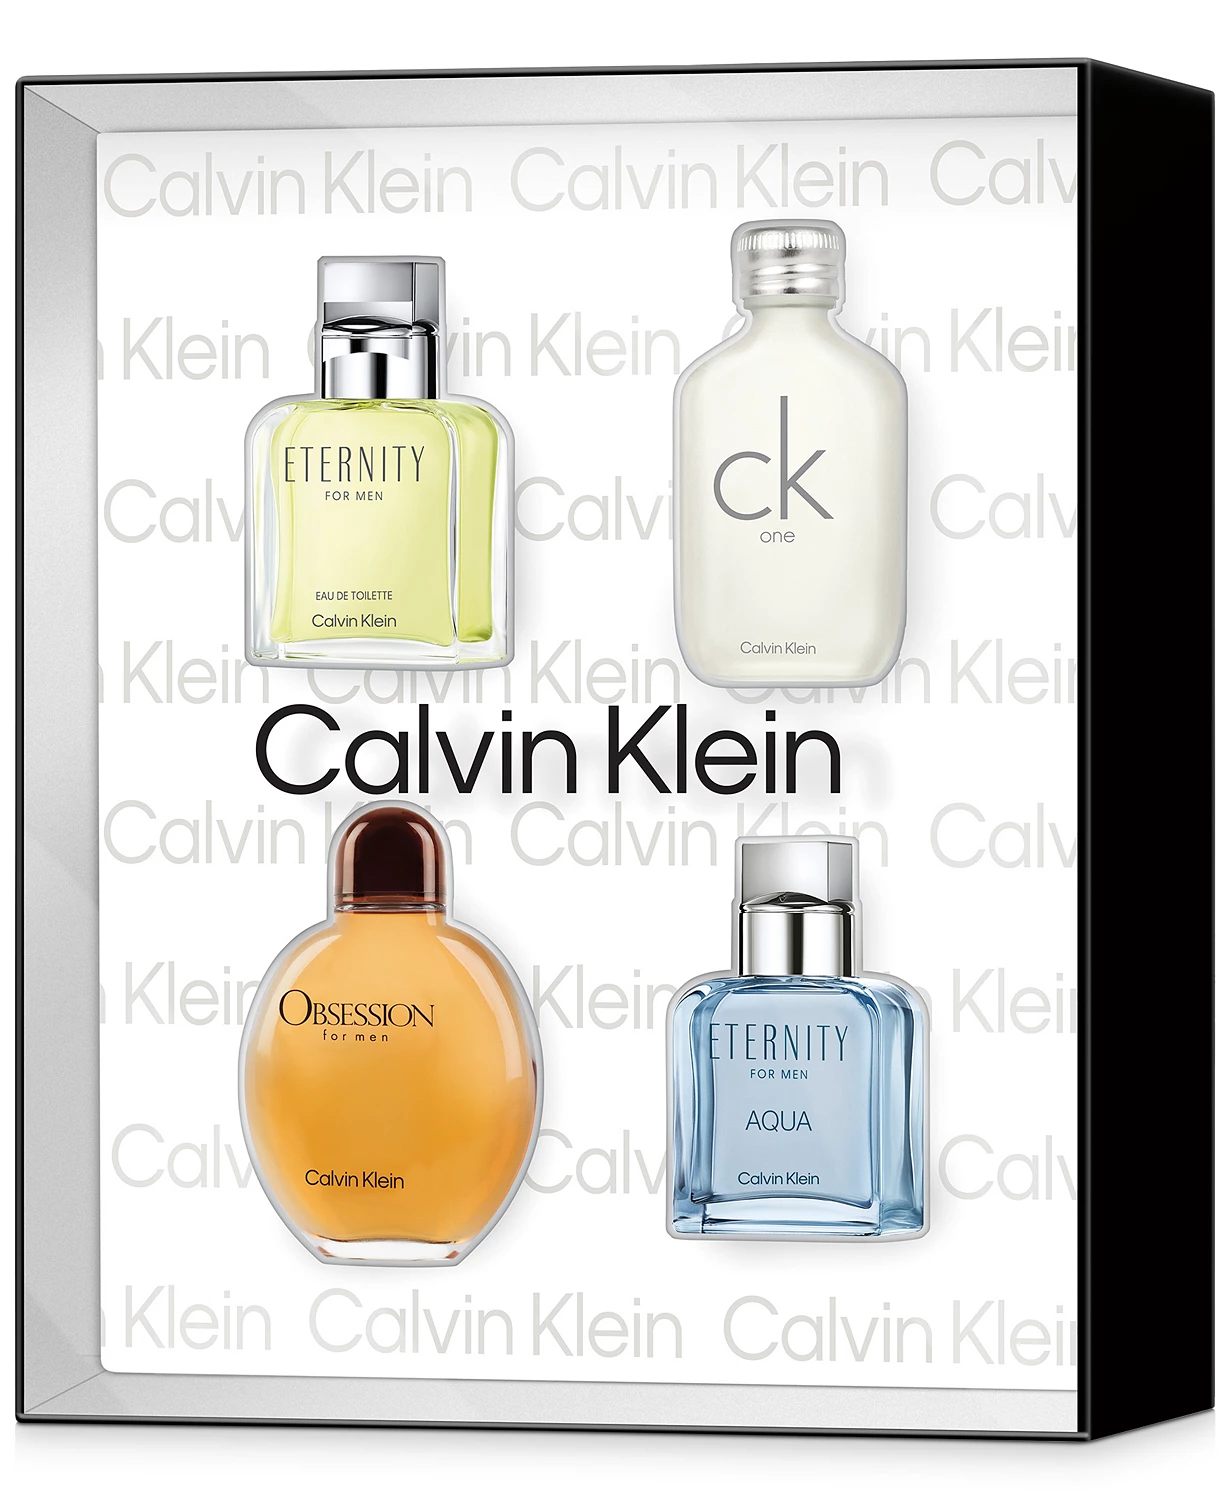 Calvin Klein Men’s 4-Pc. Classics Holiday Gift Set $25 at Macy's